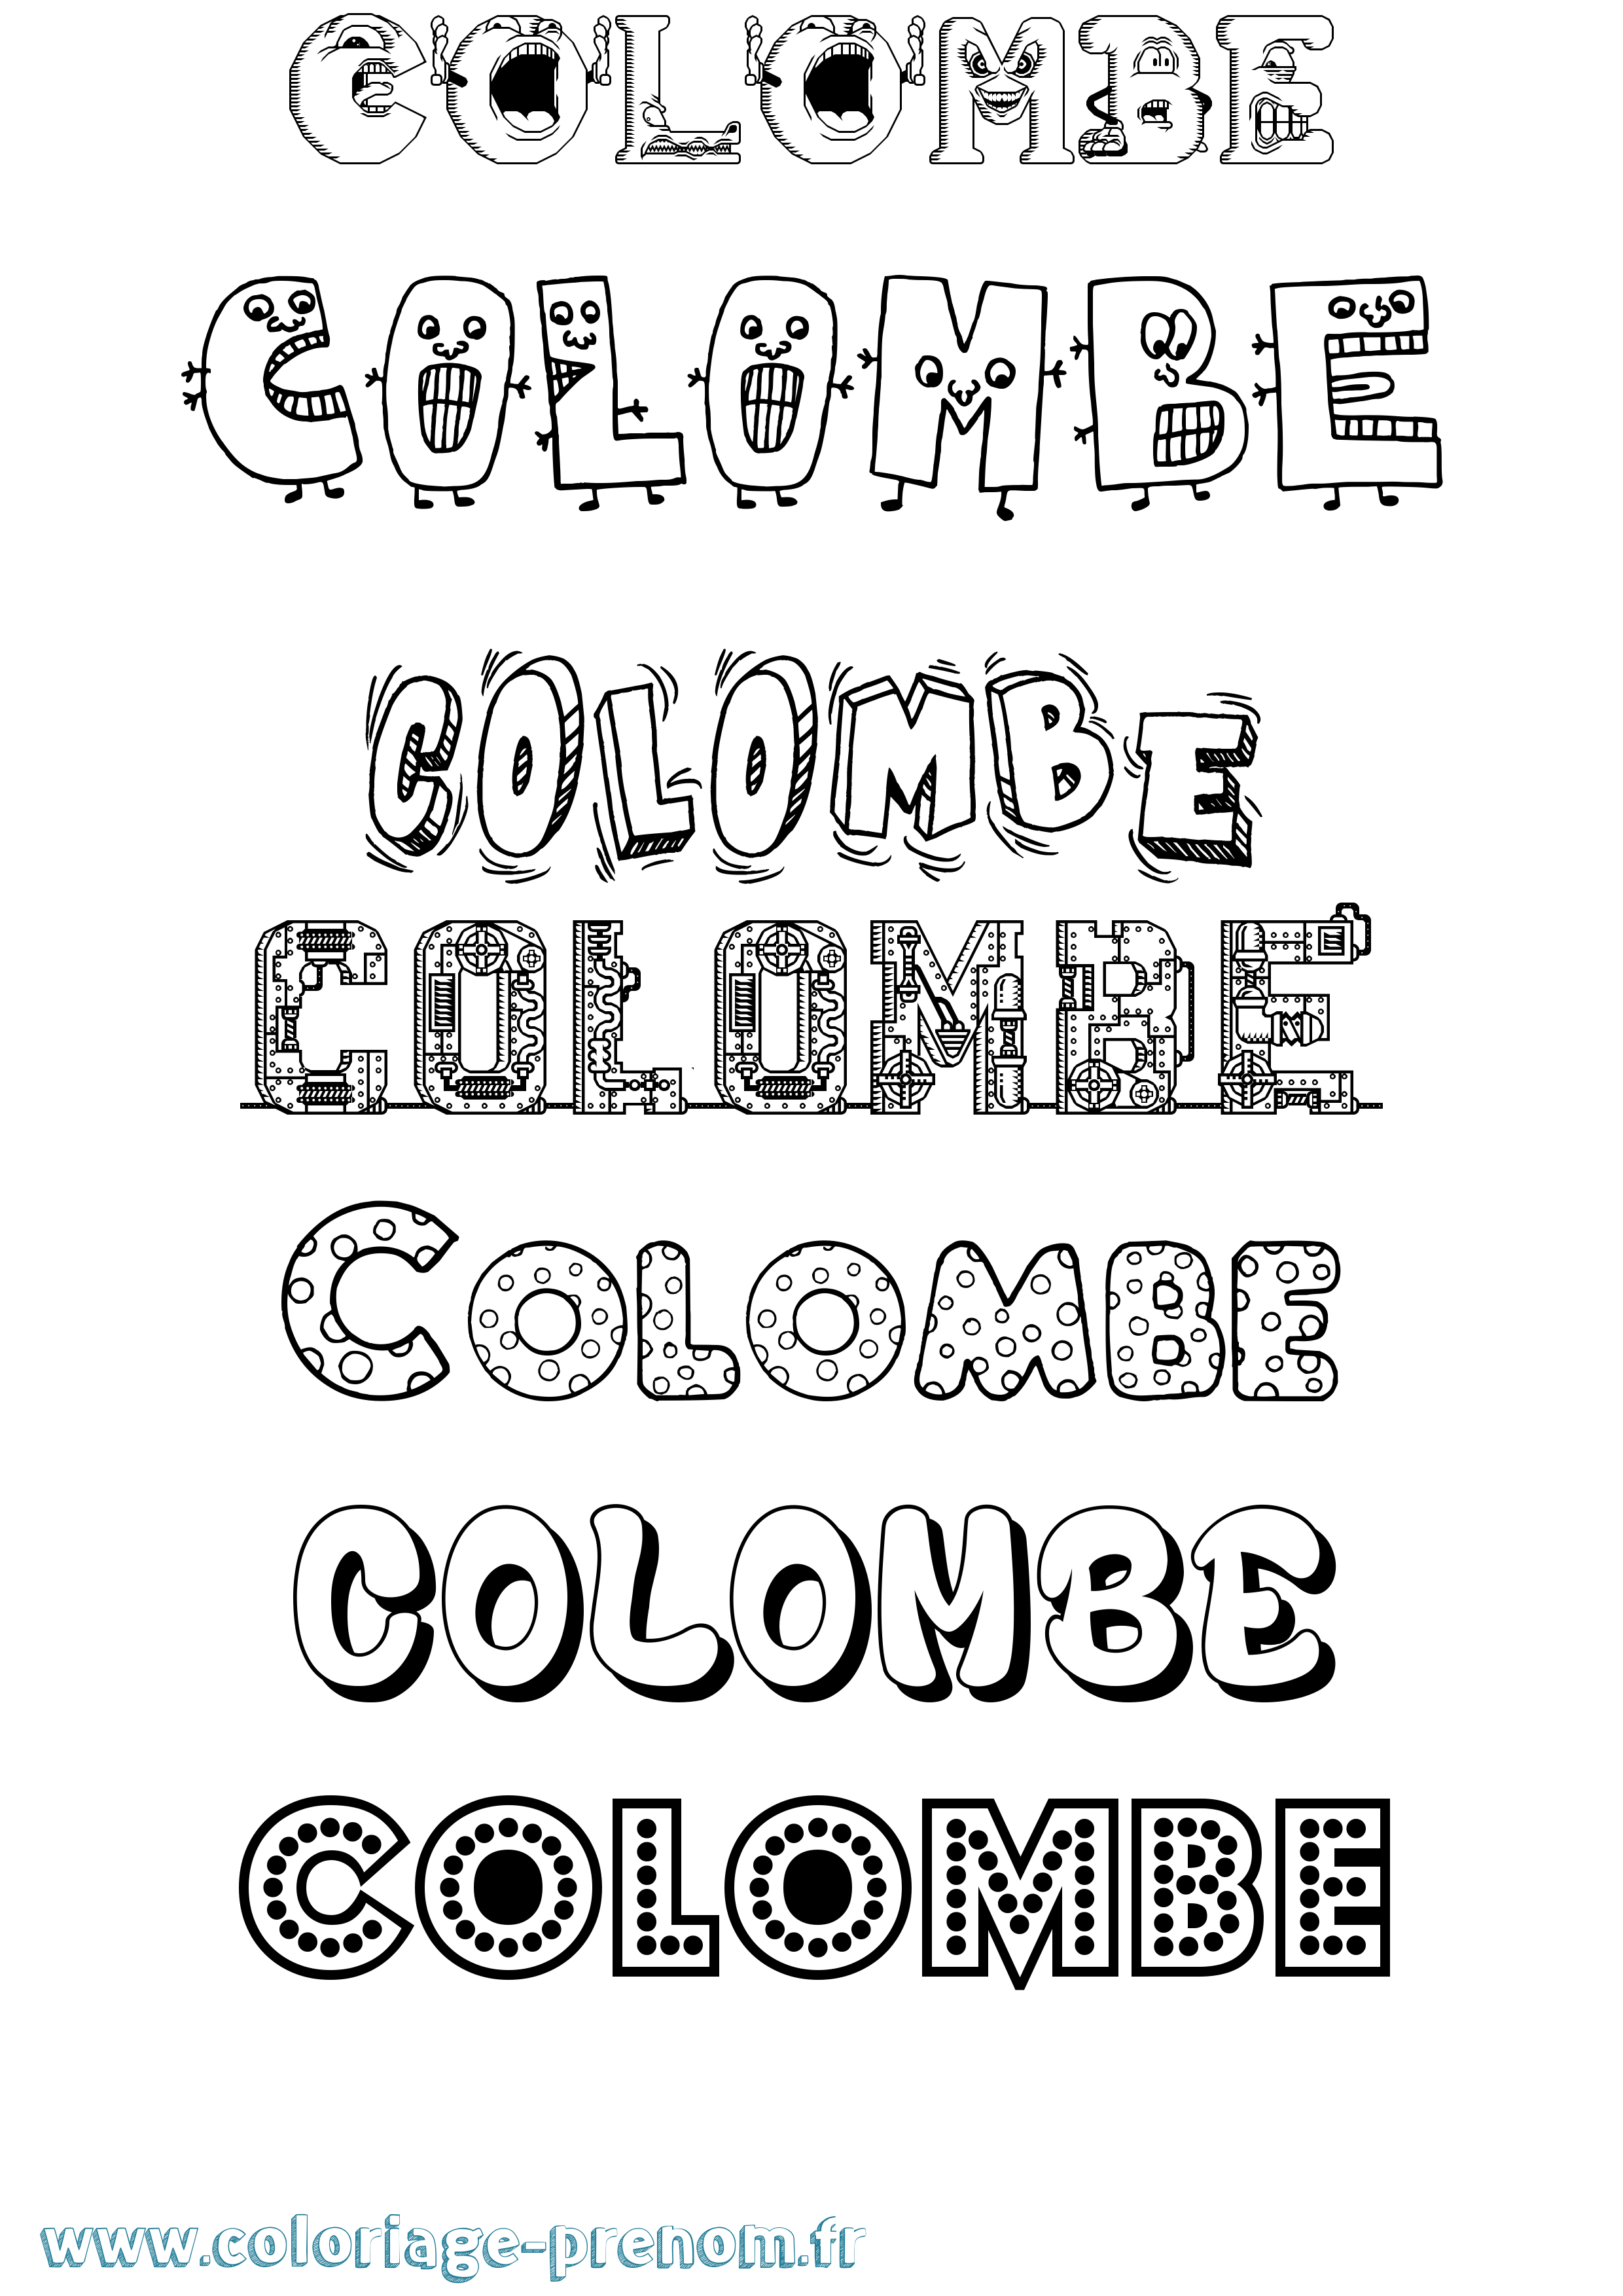 Coloriage prénom Colombe Fun